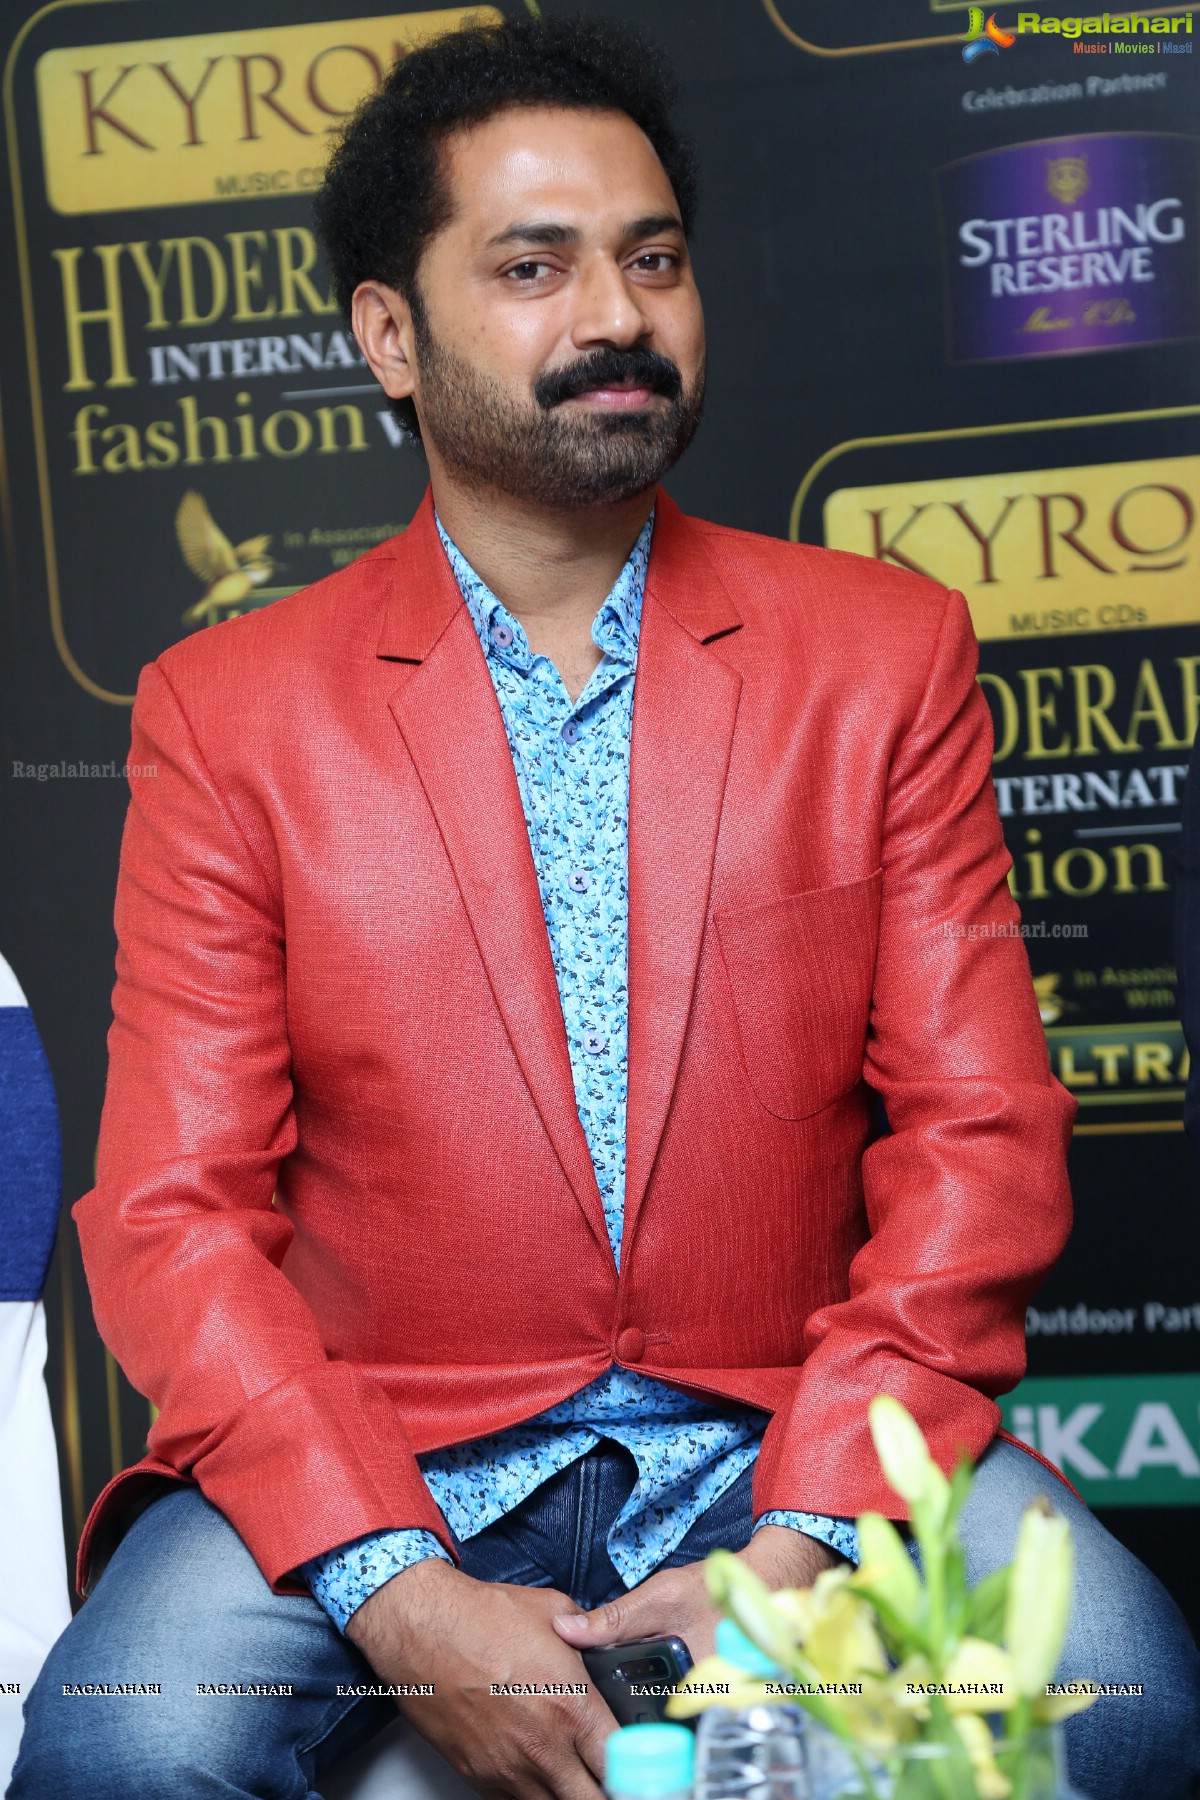 Kyron Hyderabad Internation Fashion Week Press Meet at Taj Banjara